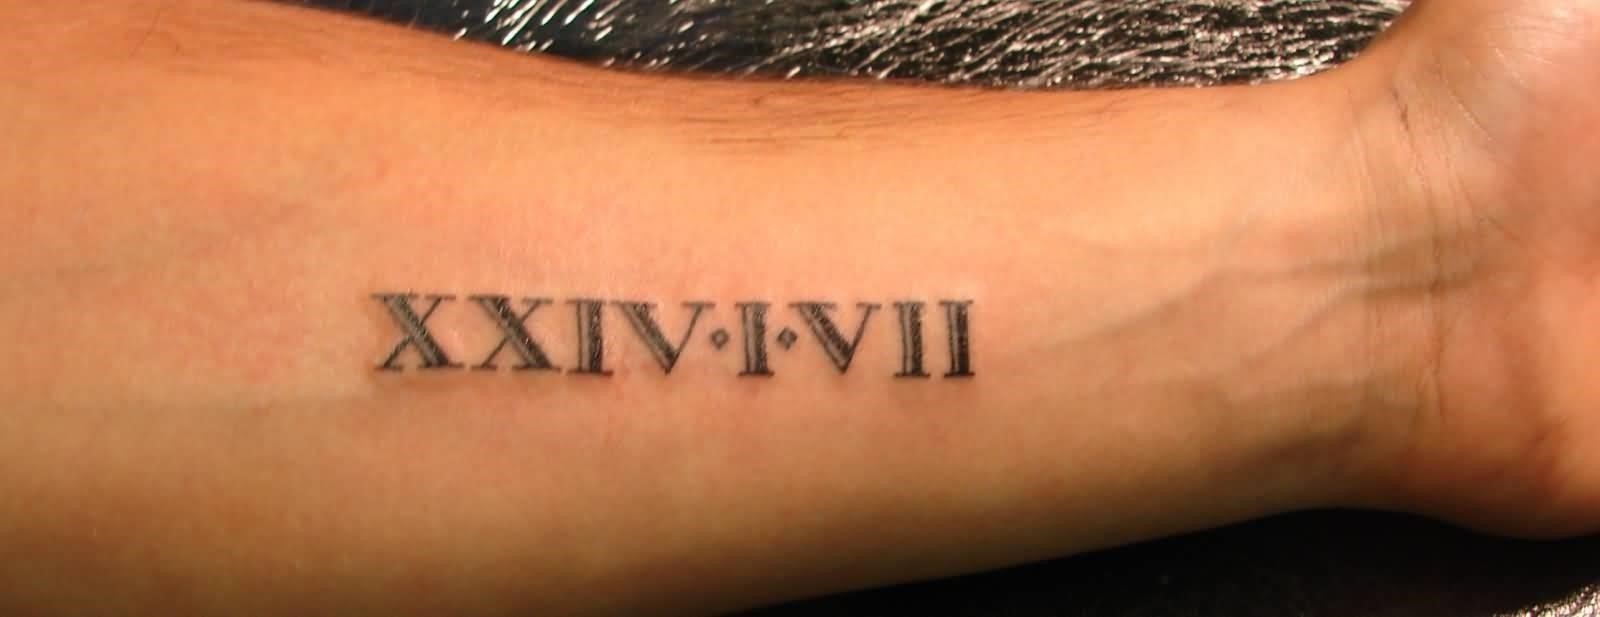 250 Birth Date Tattoos Ideas 2020 Roman Numeral Designs With Beautiful  Fonts  Date tattoos Small tattoos Tattoos